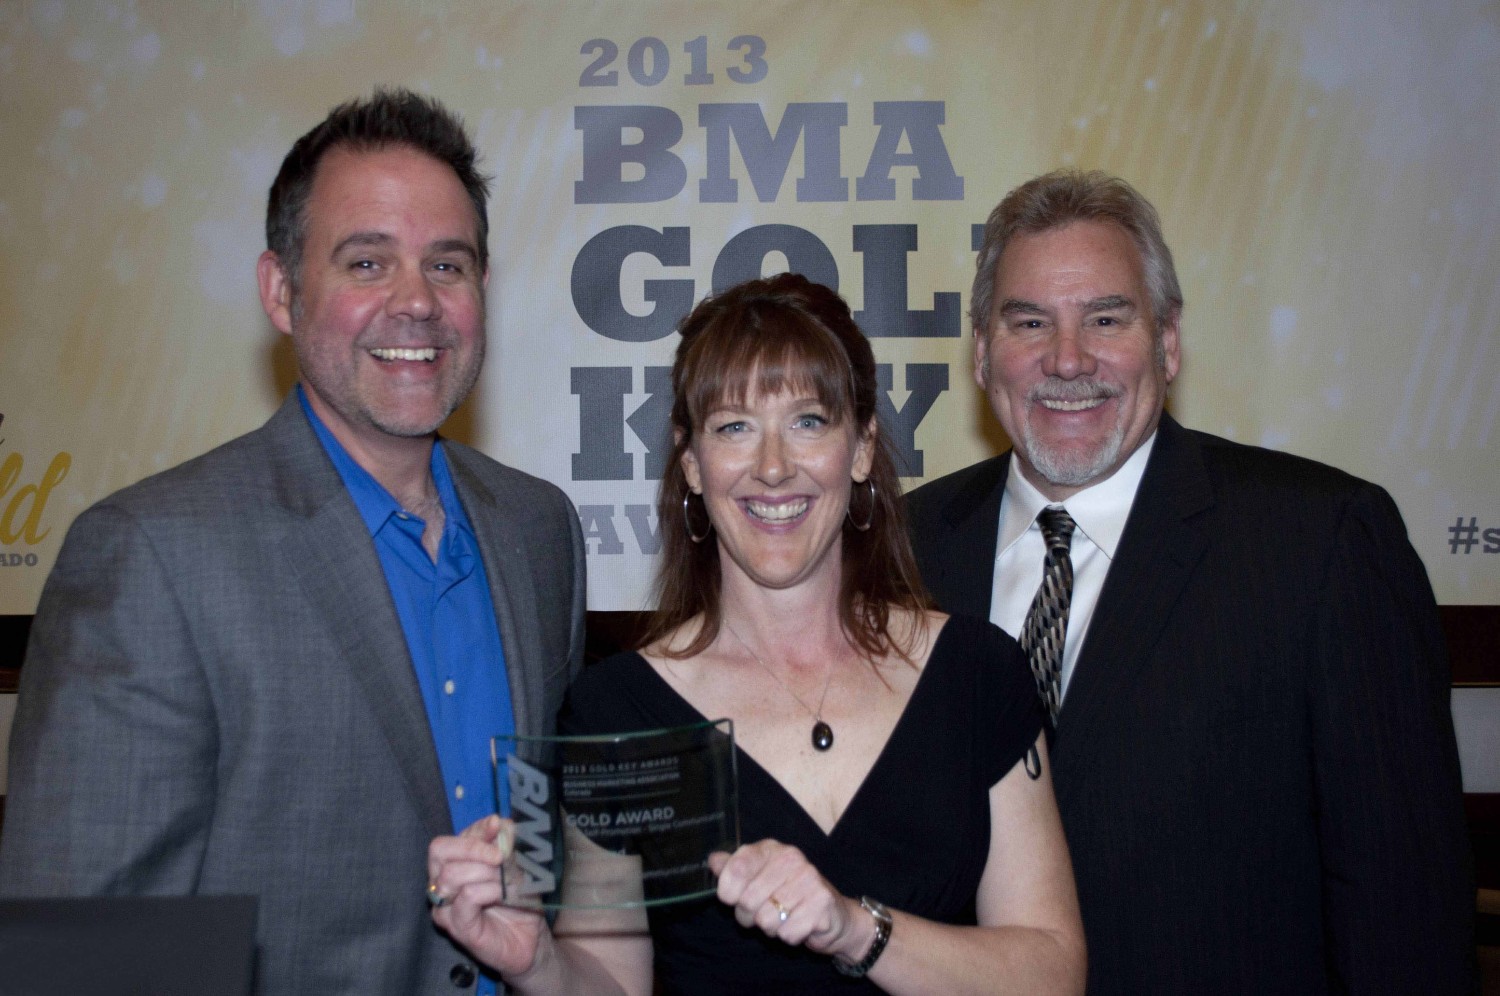 Dave, Susan & Mike - 2013 BMA Gold Key